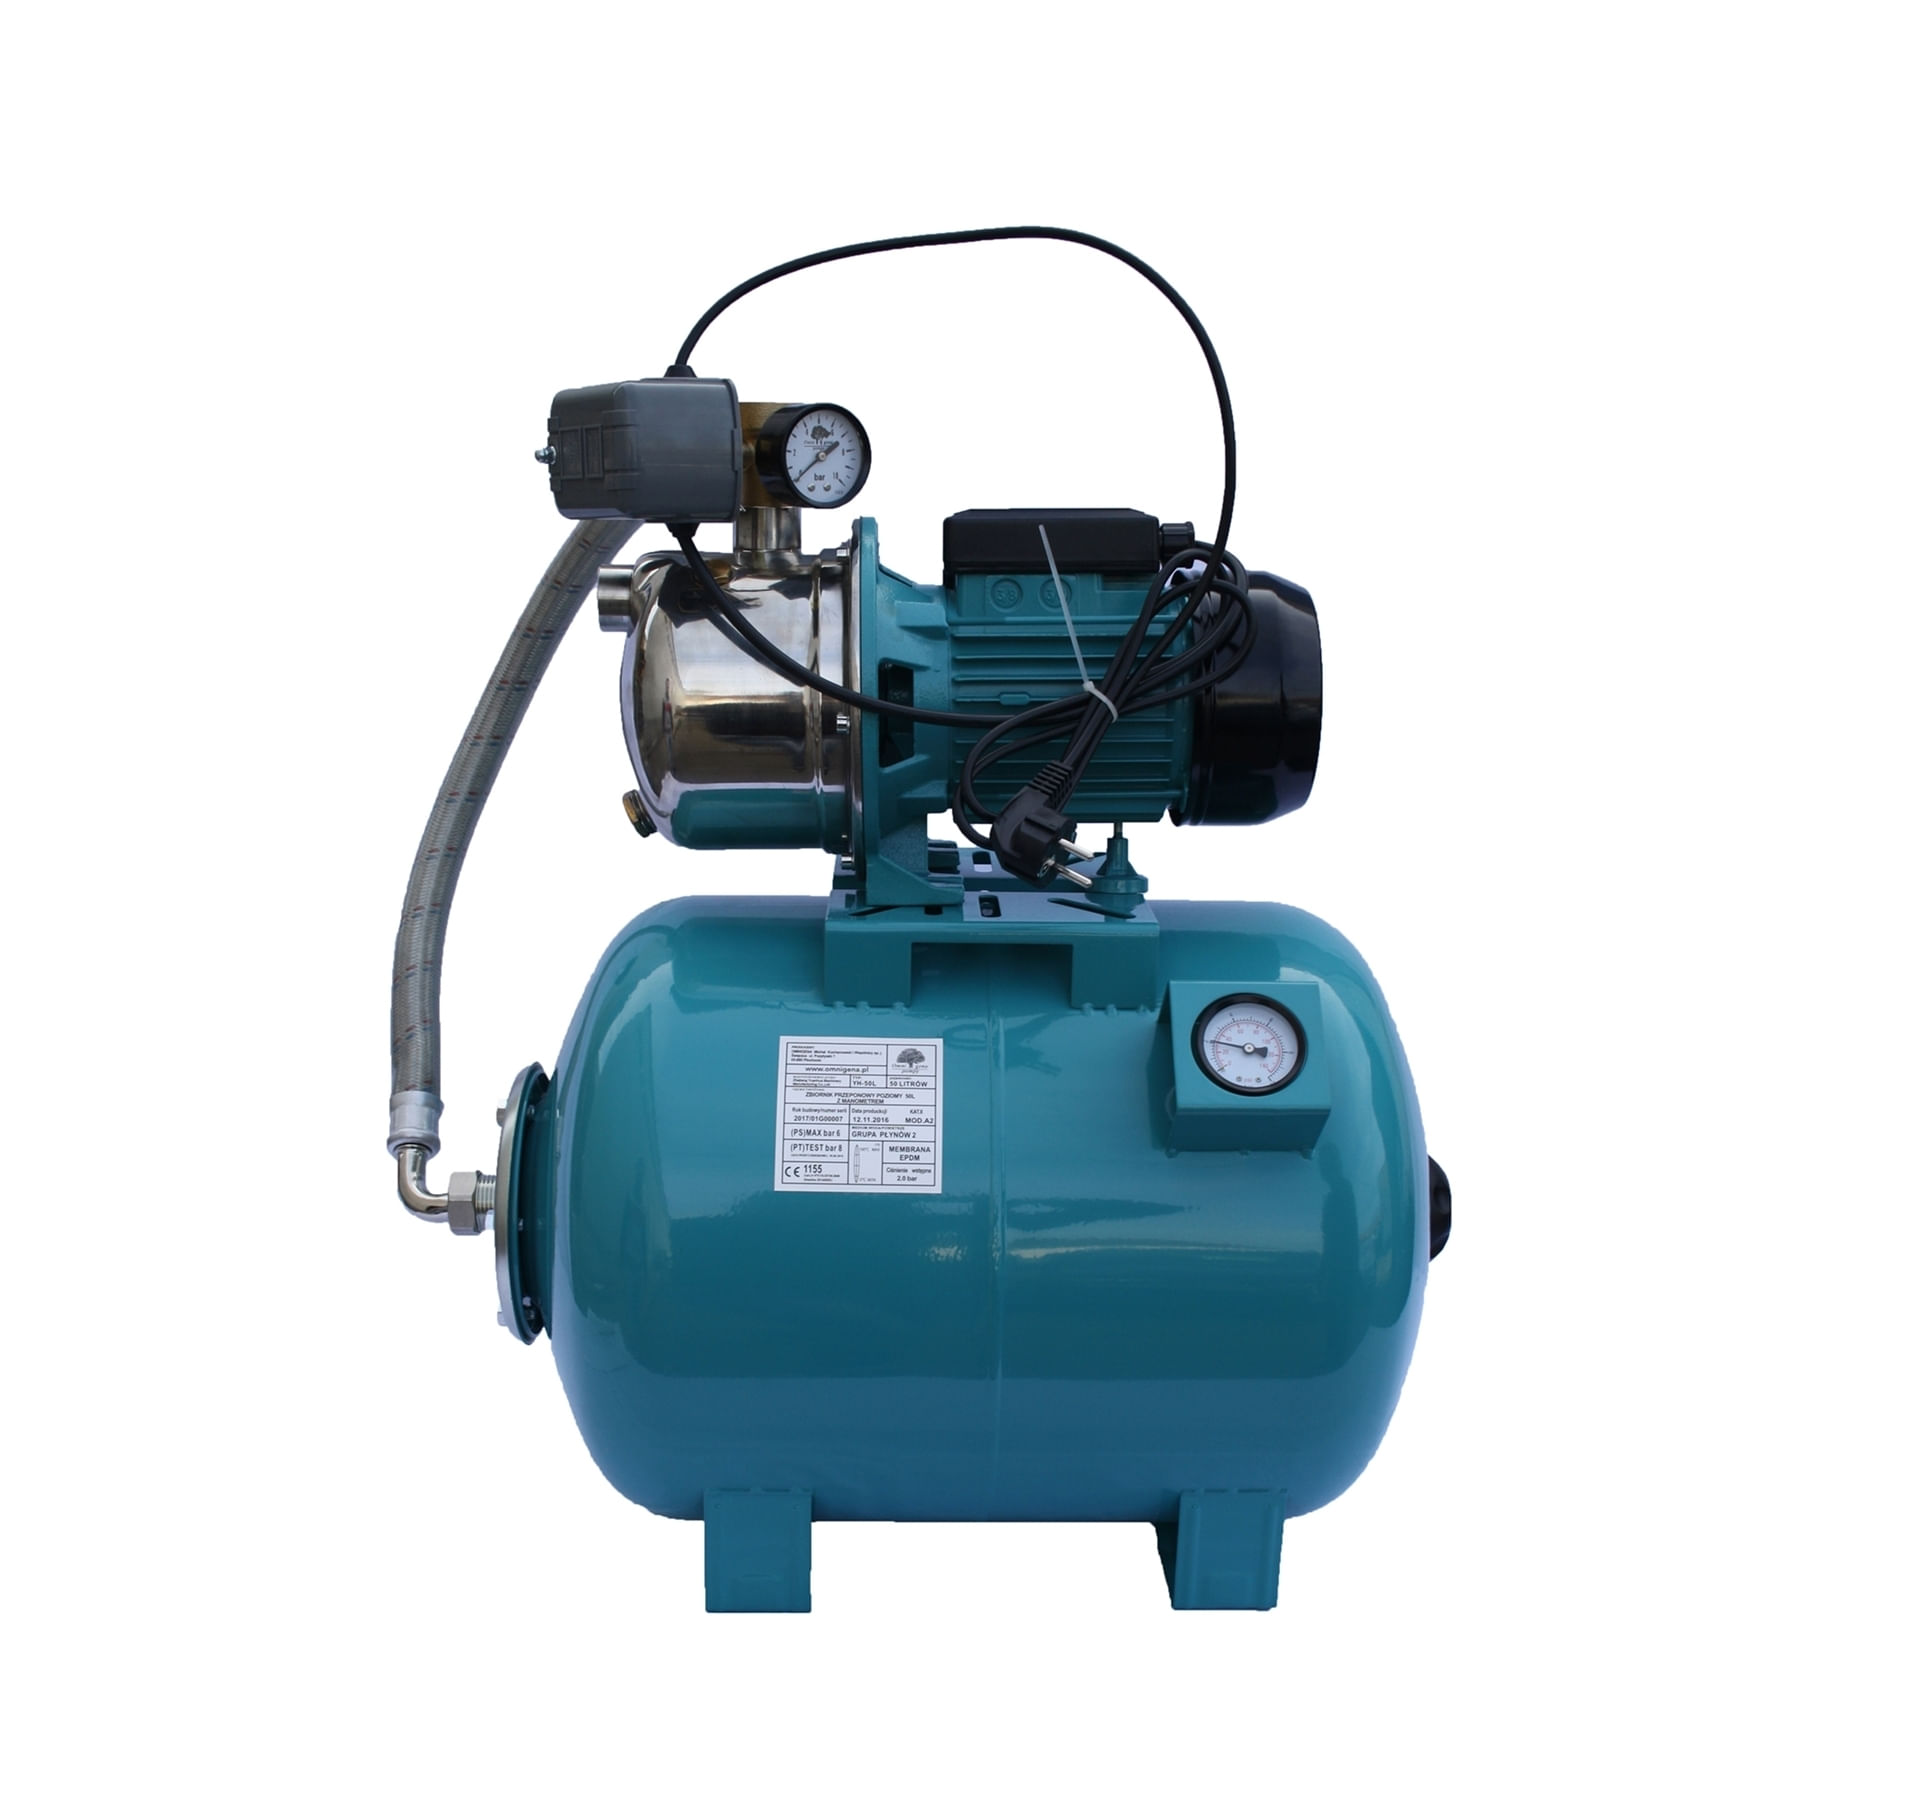 Hidrofor APC JY 1000/50 rezervor 50 litri cu manometru, 1.1 Kw, 03020119/50M